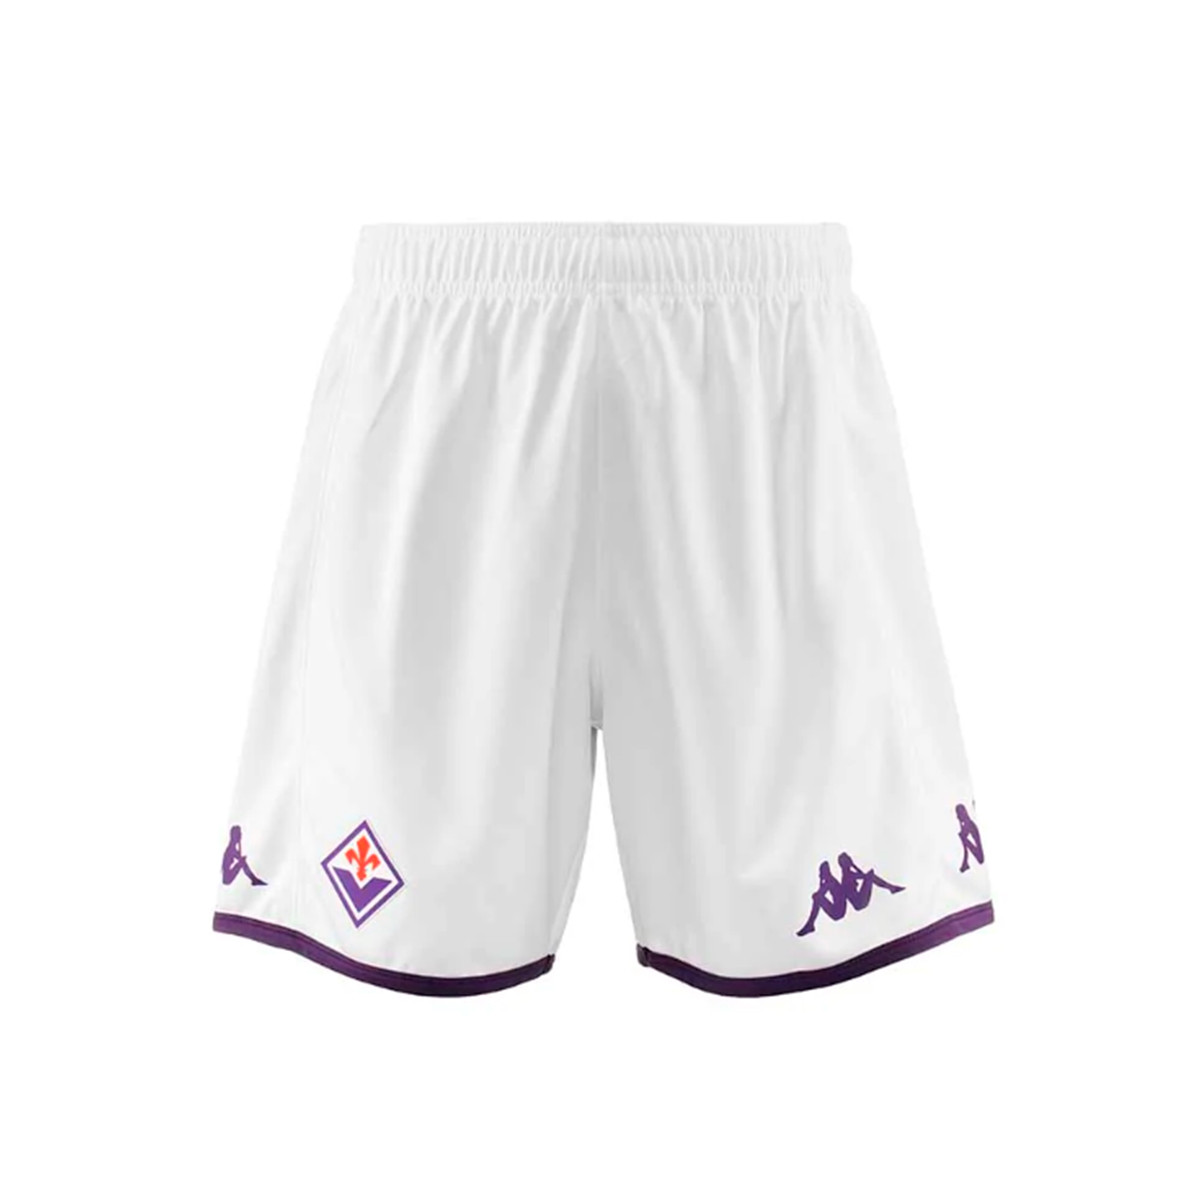 Kappa Outdoor Jersey Fiorentina Ac 2021/22 White